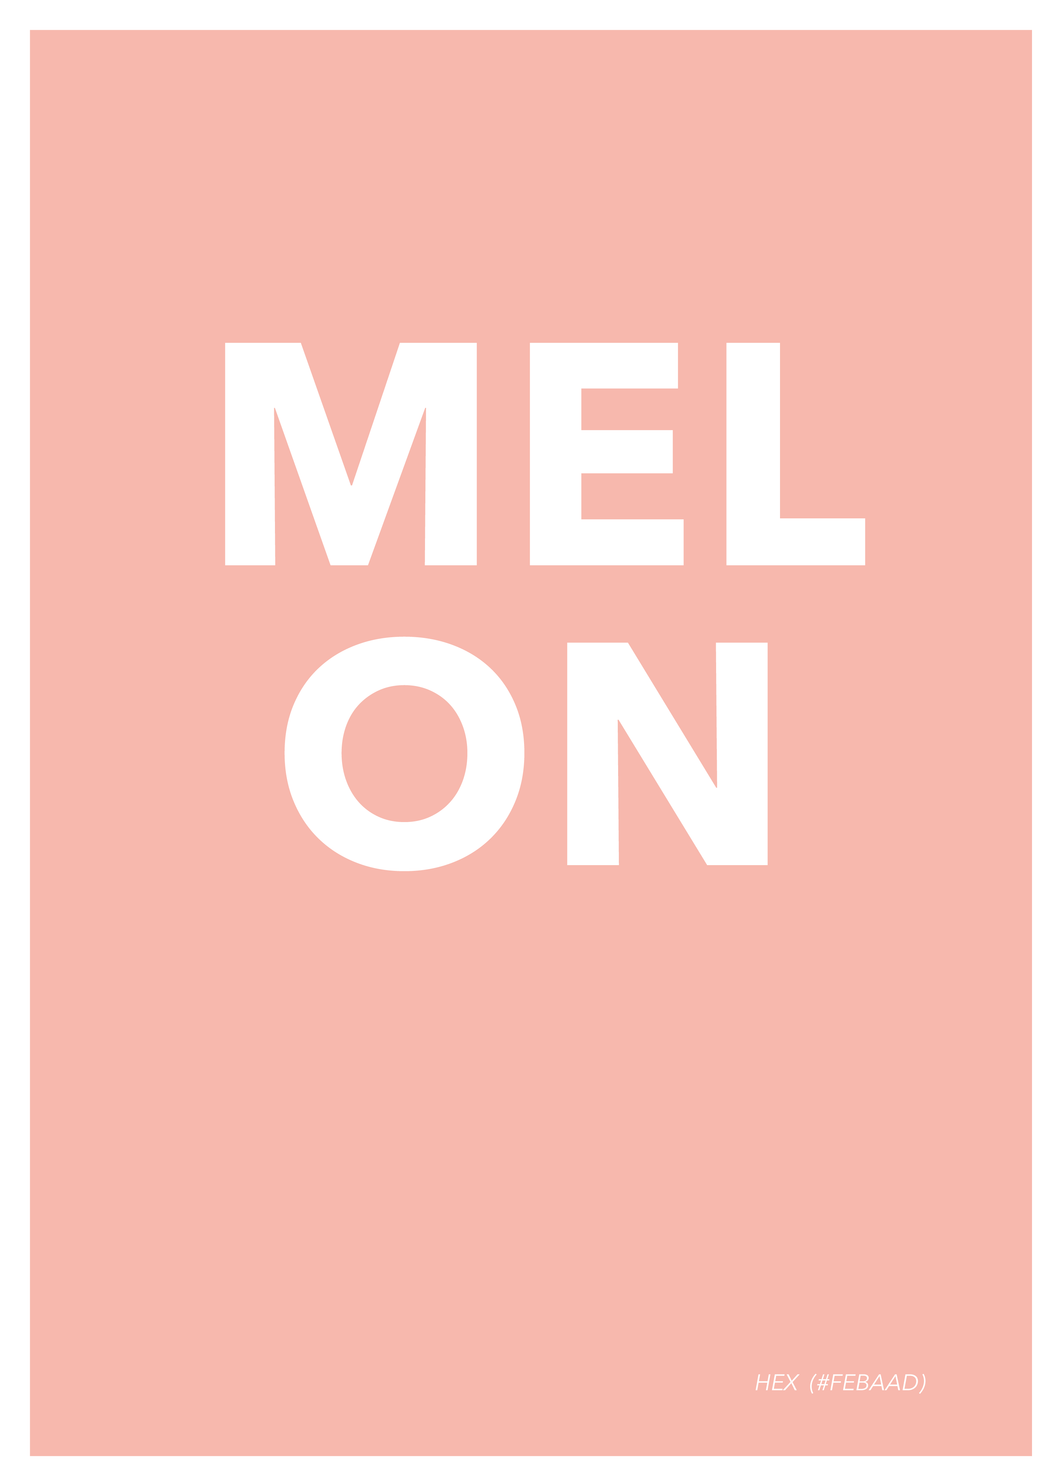 Melon Poster